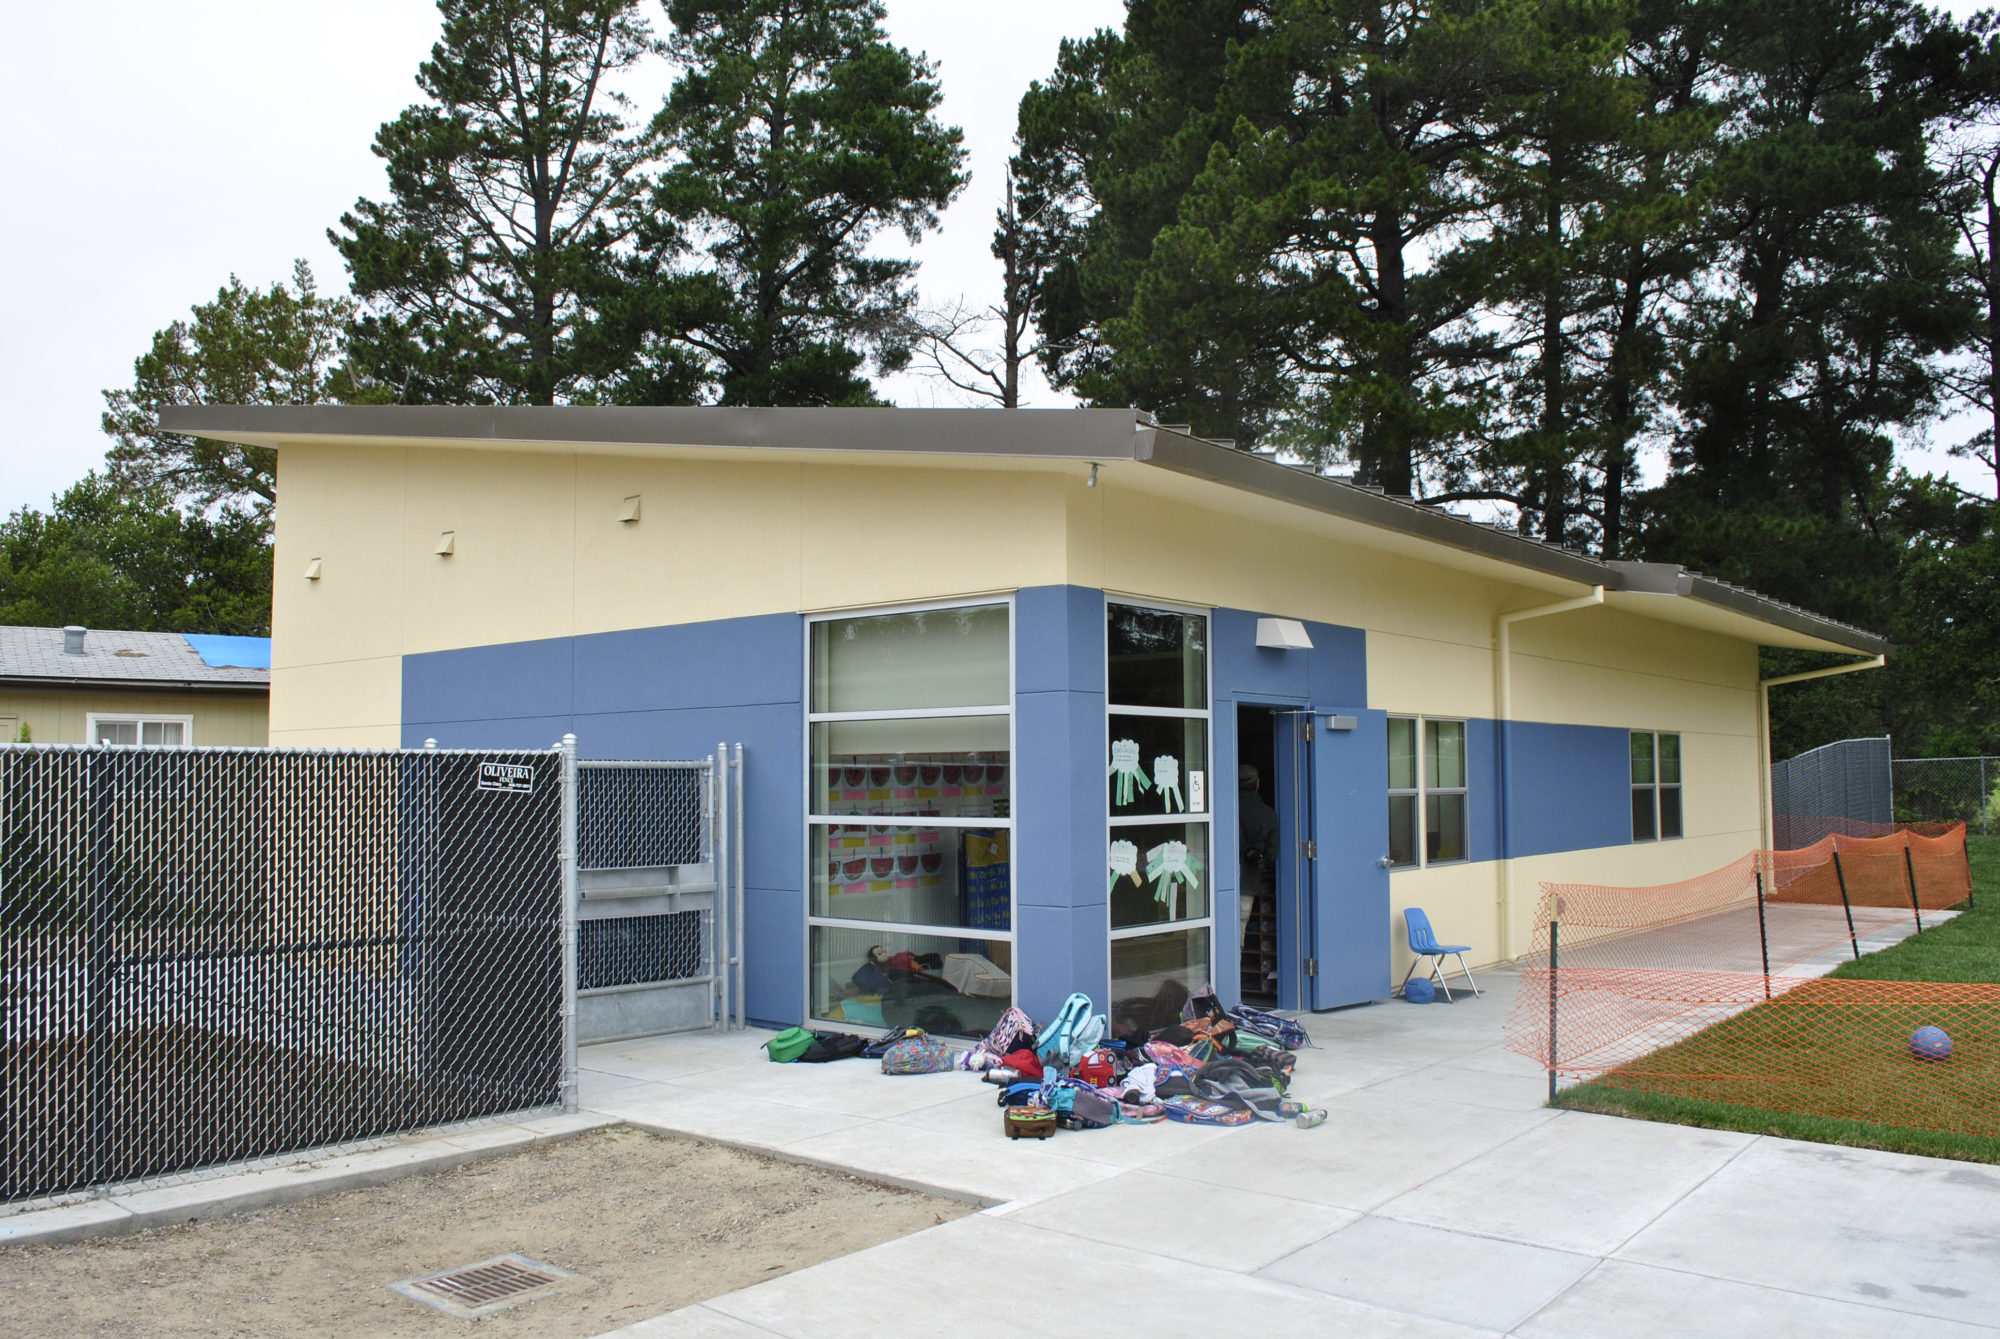 Santa Cruz Gardens Elementary School New Modular Classroom Building Exterior